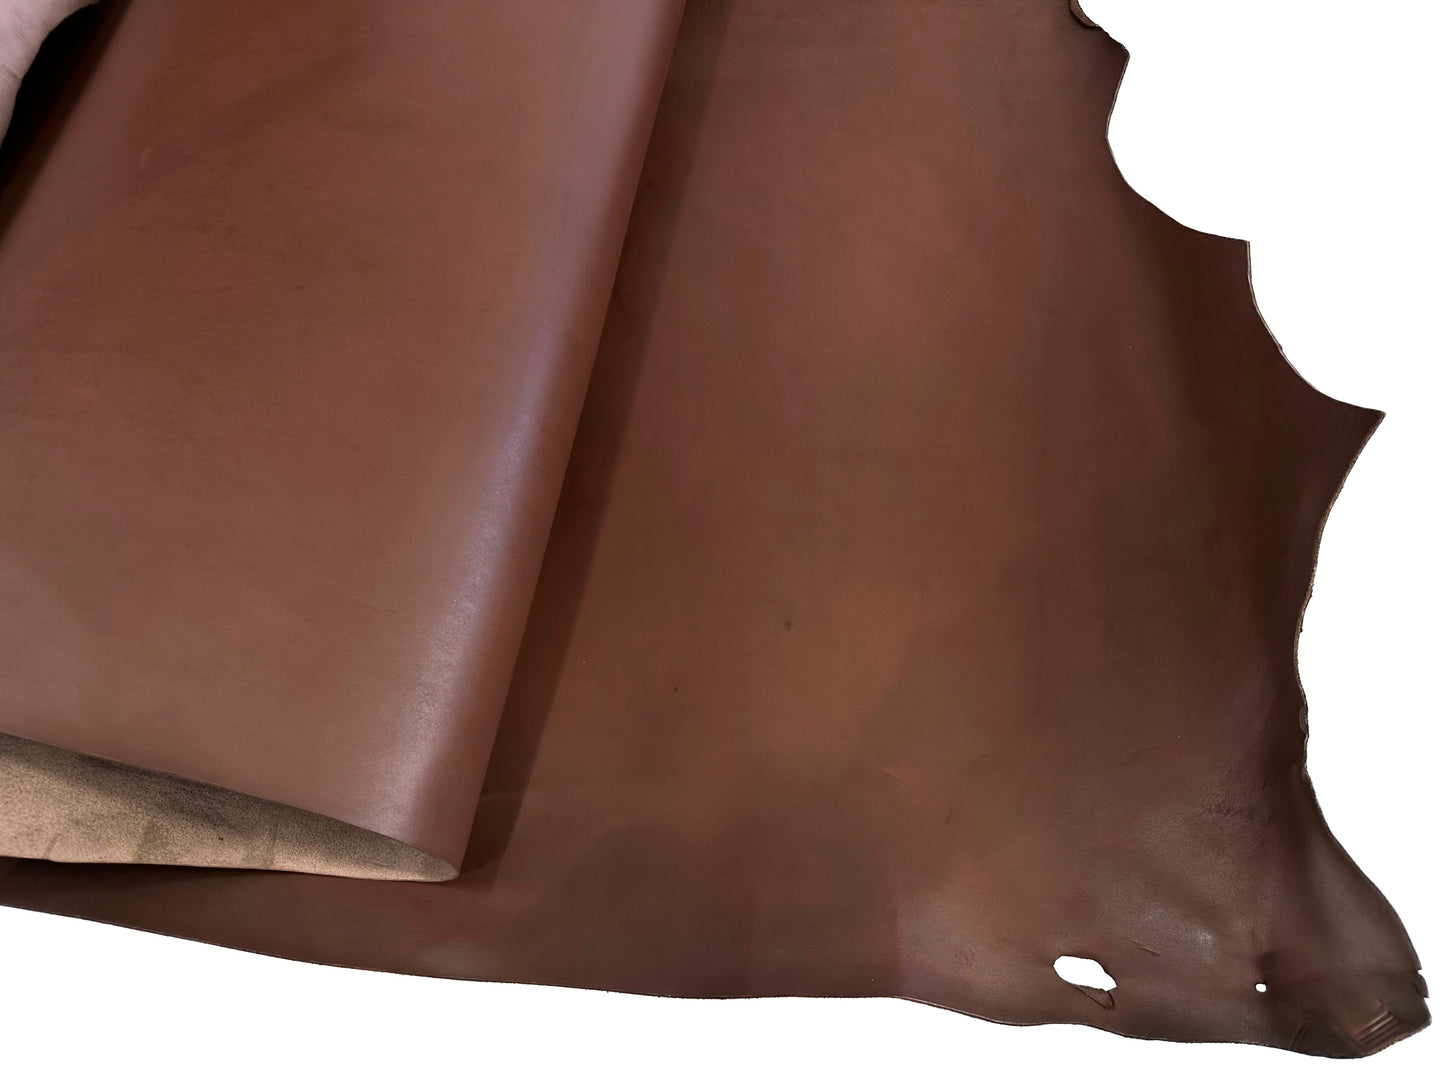 FUK Original Tanned Leather #Choco